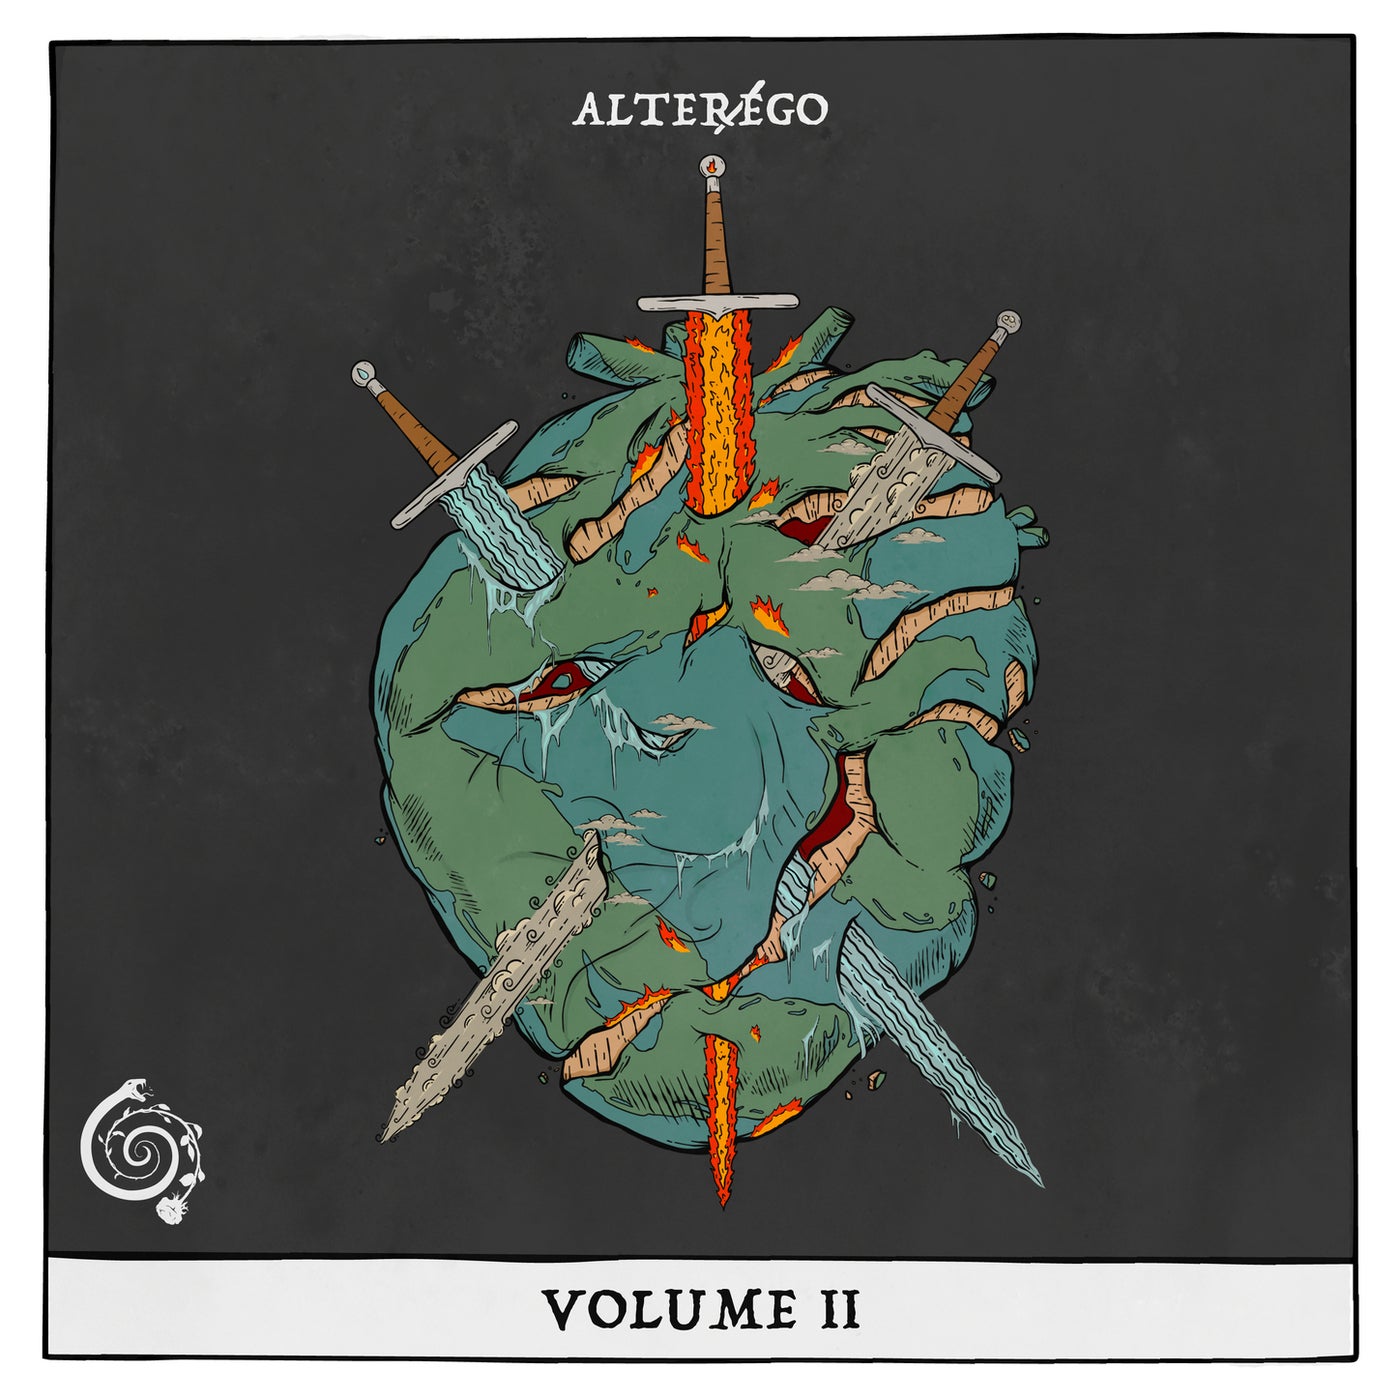 Alter/Ego Music & Downloads on Beatport